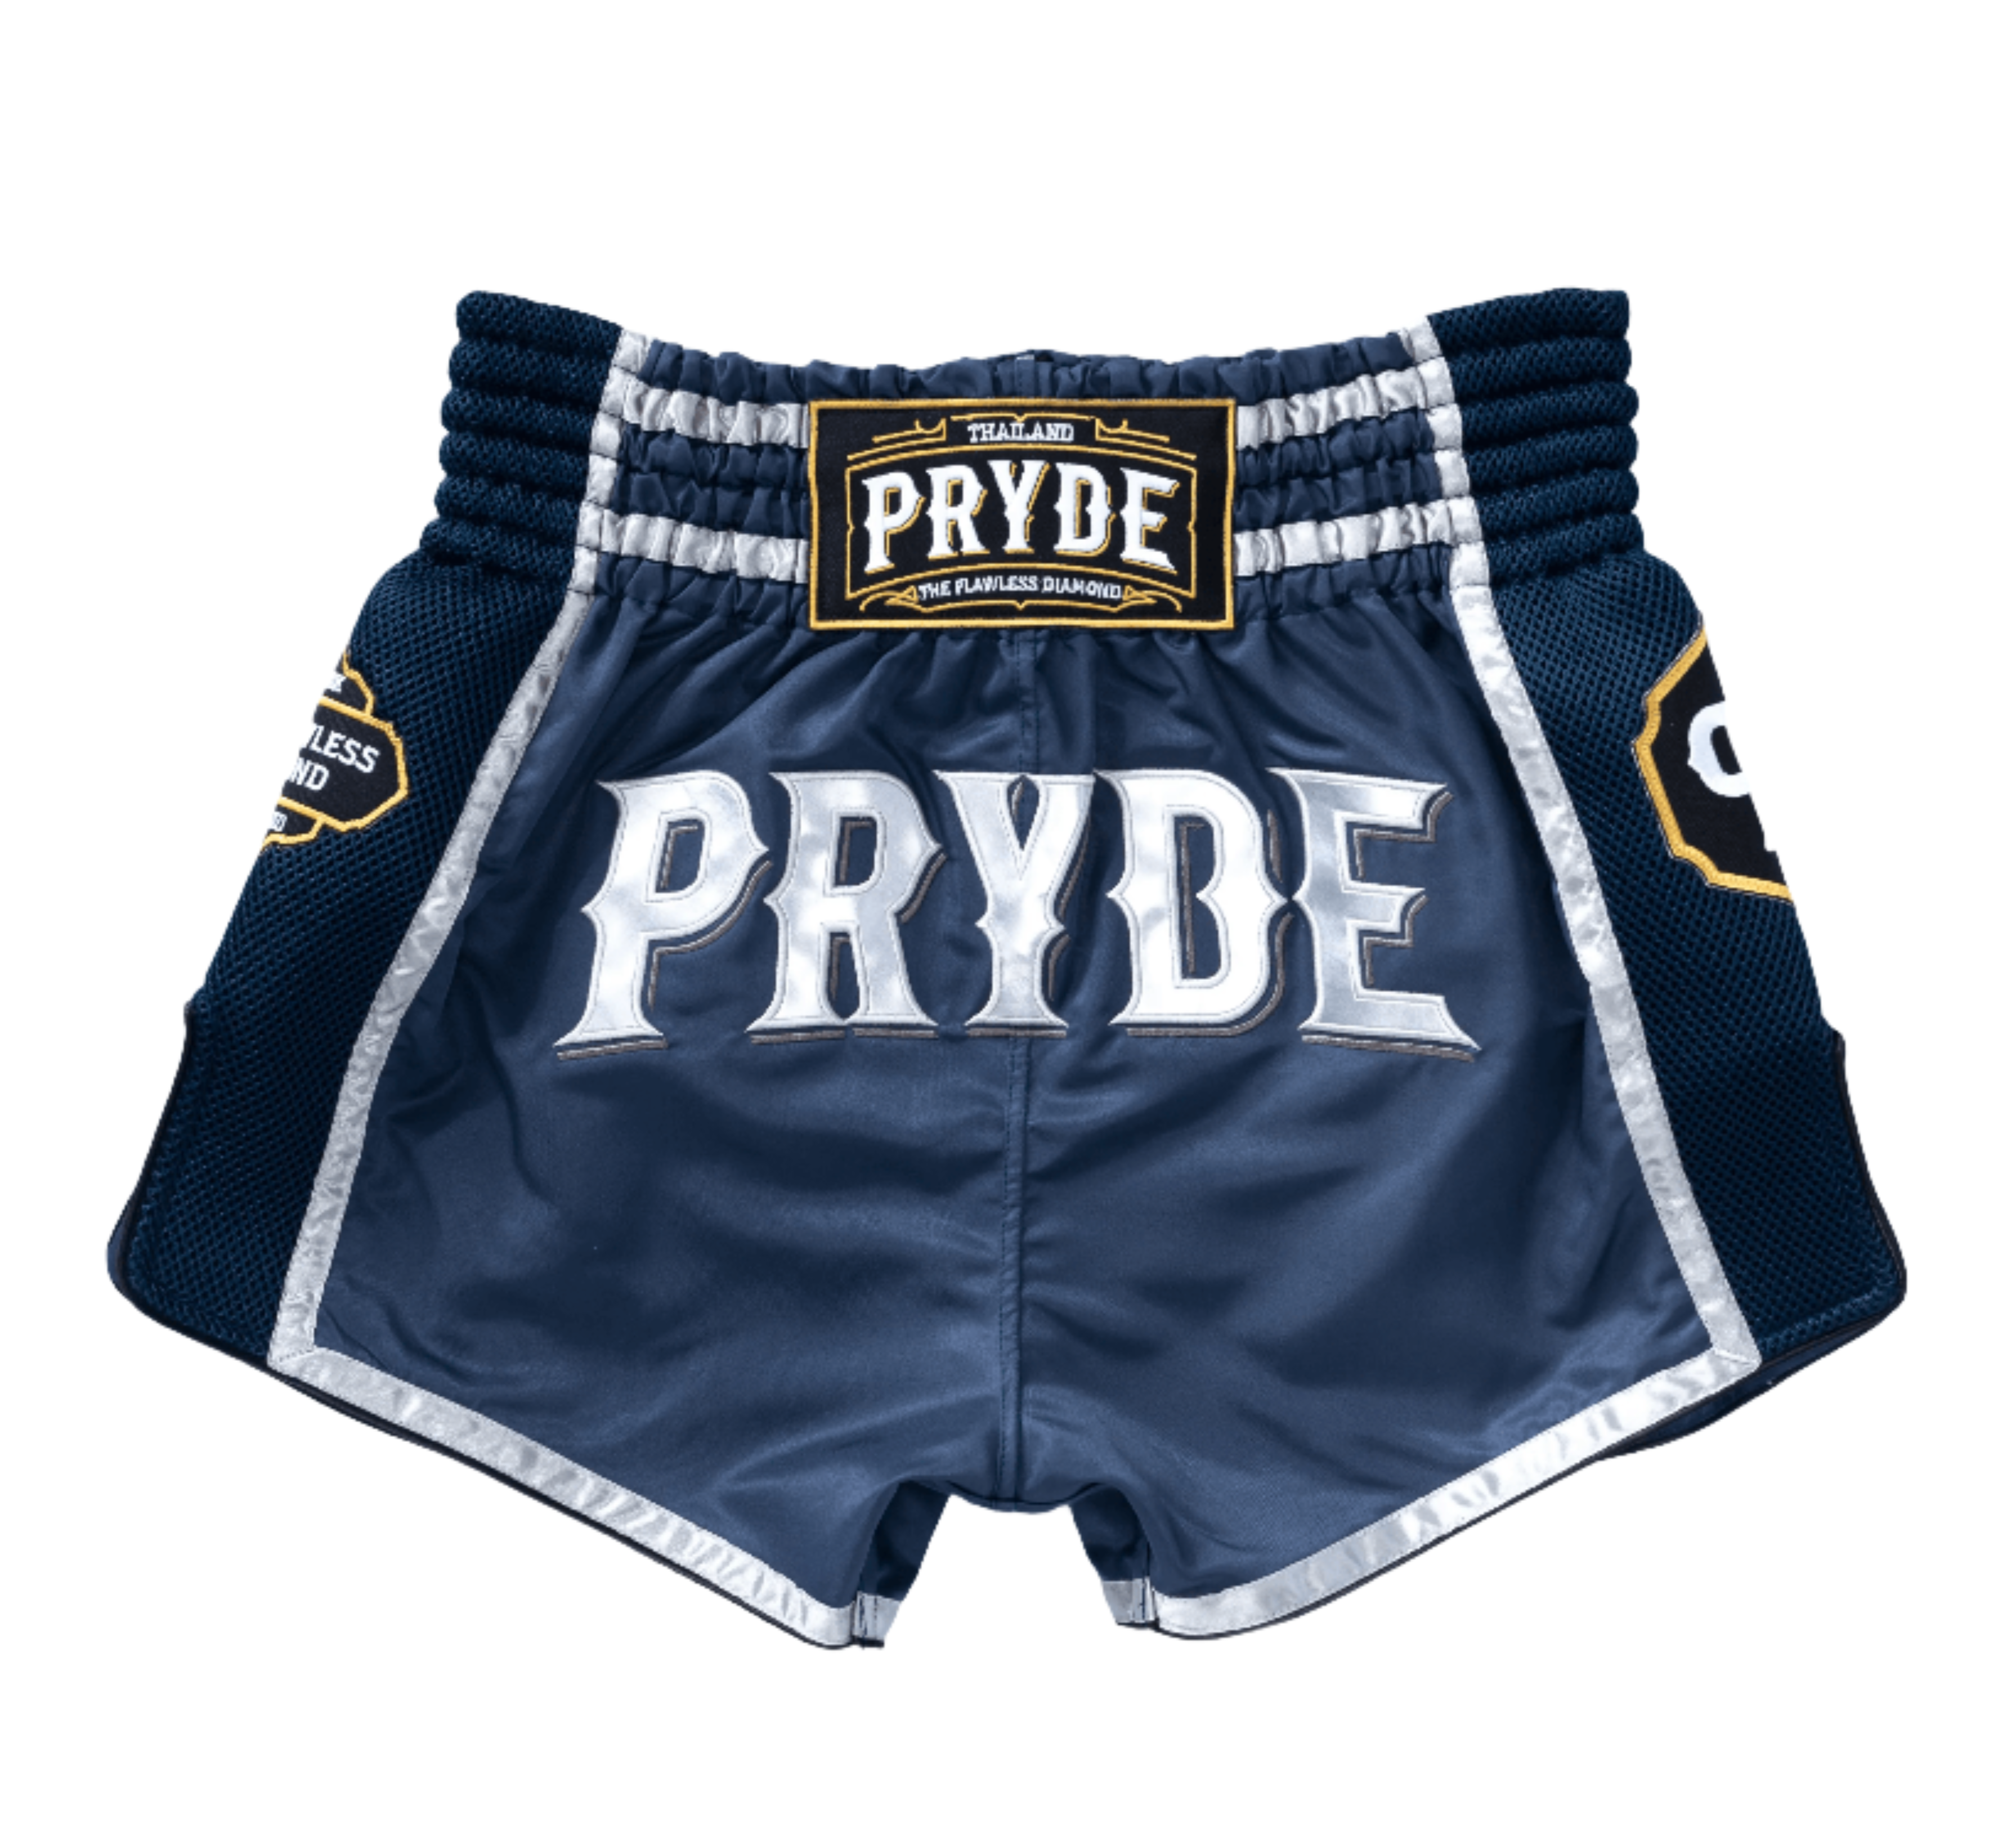 PRYDE Muay Thai Shorts - Navy & Silver - Muay Thailand